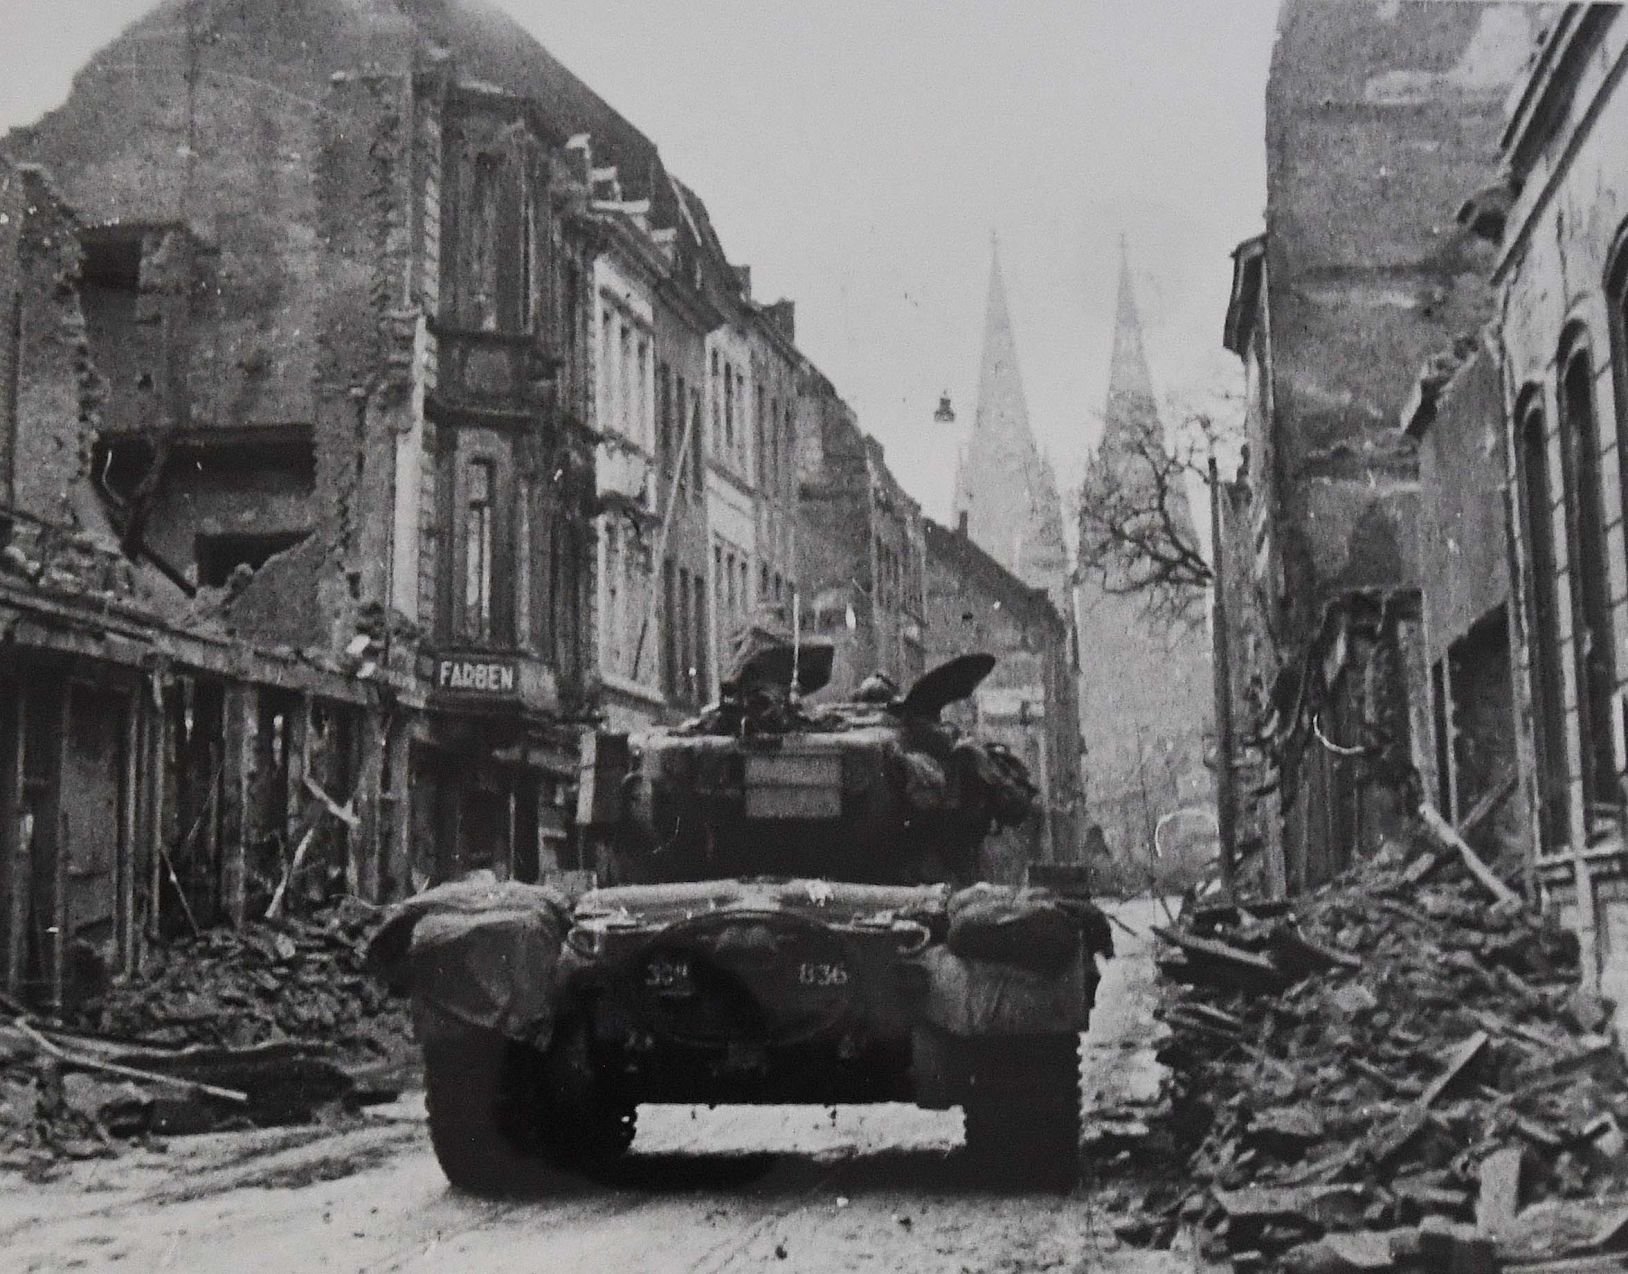 bates wwii tank battle cologne 1945